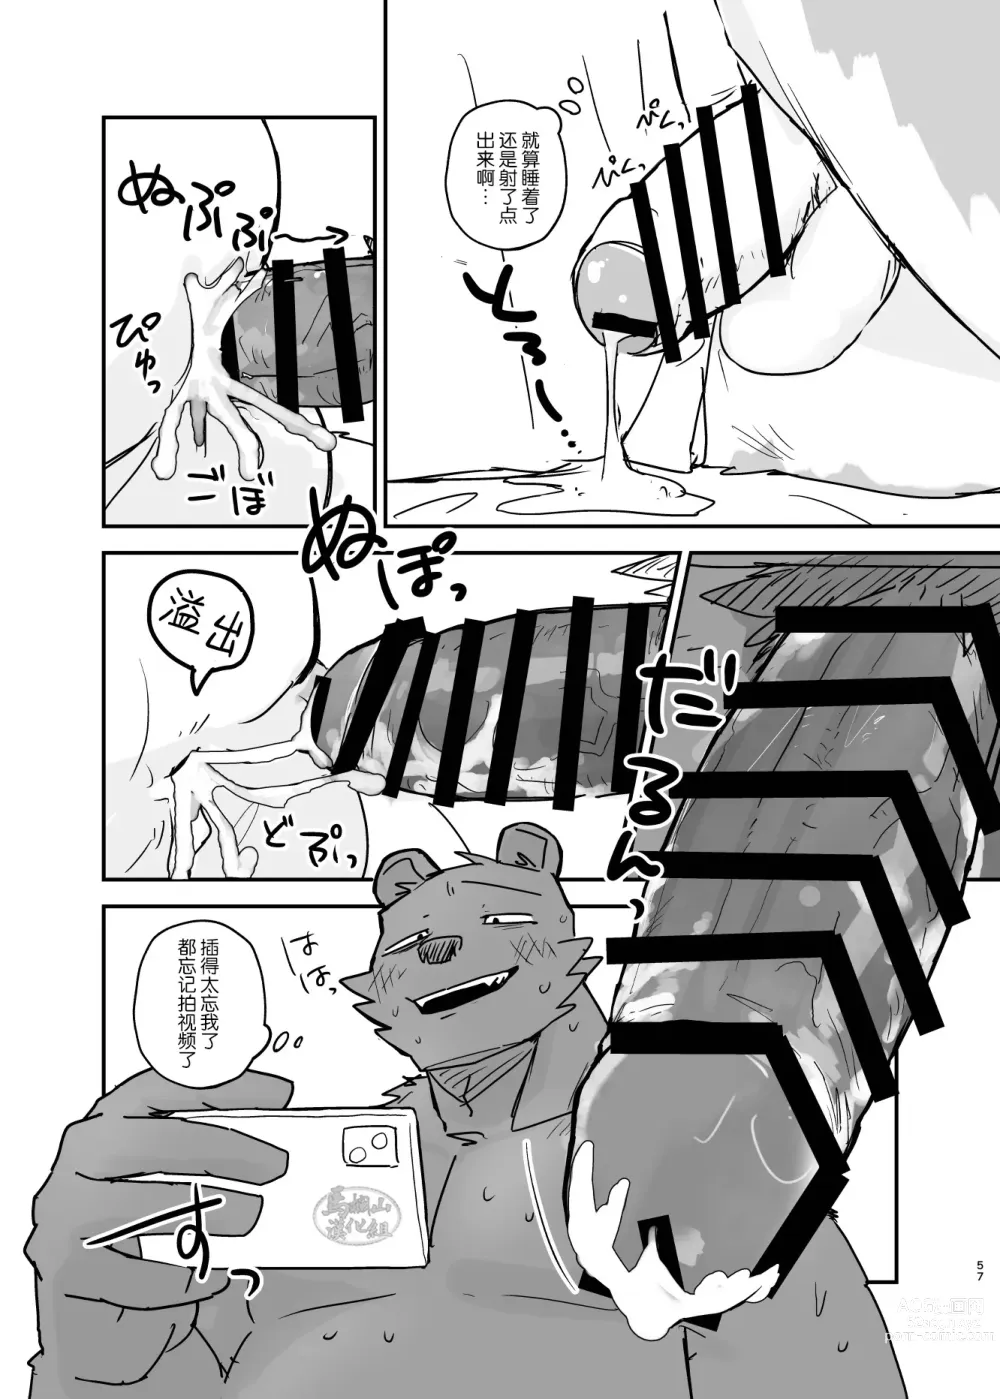 Page 56 of doujinshi 梦乡时分的情事